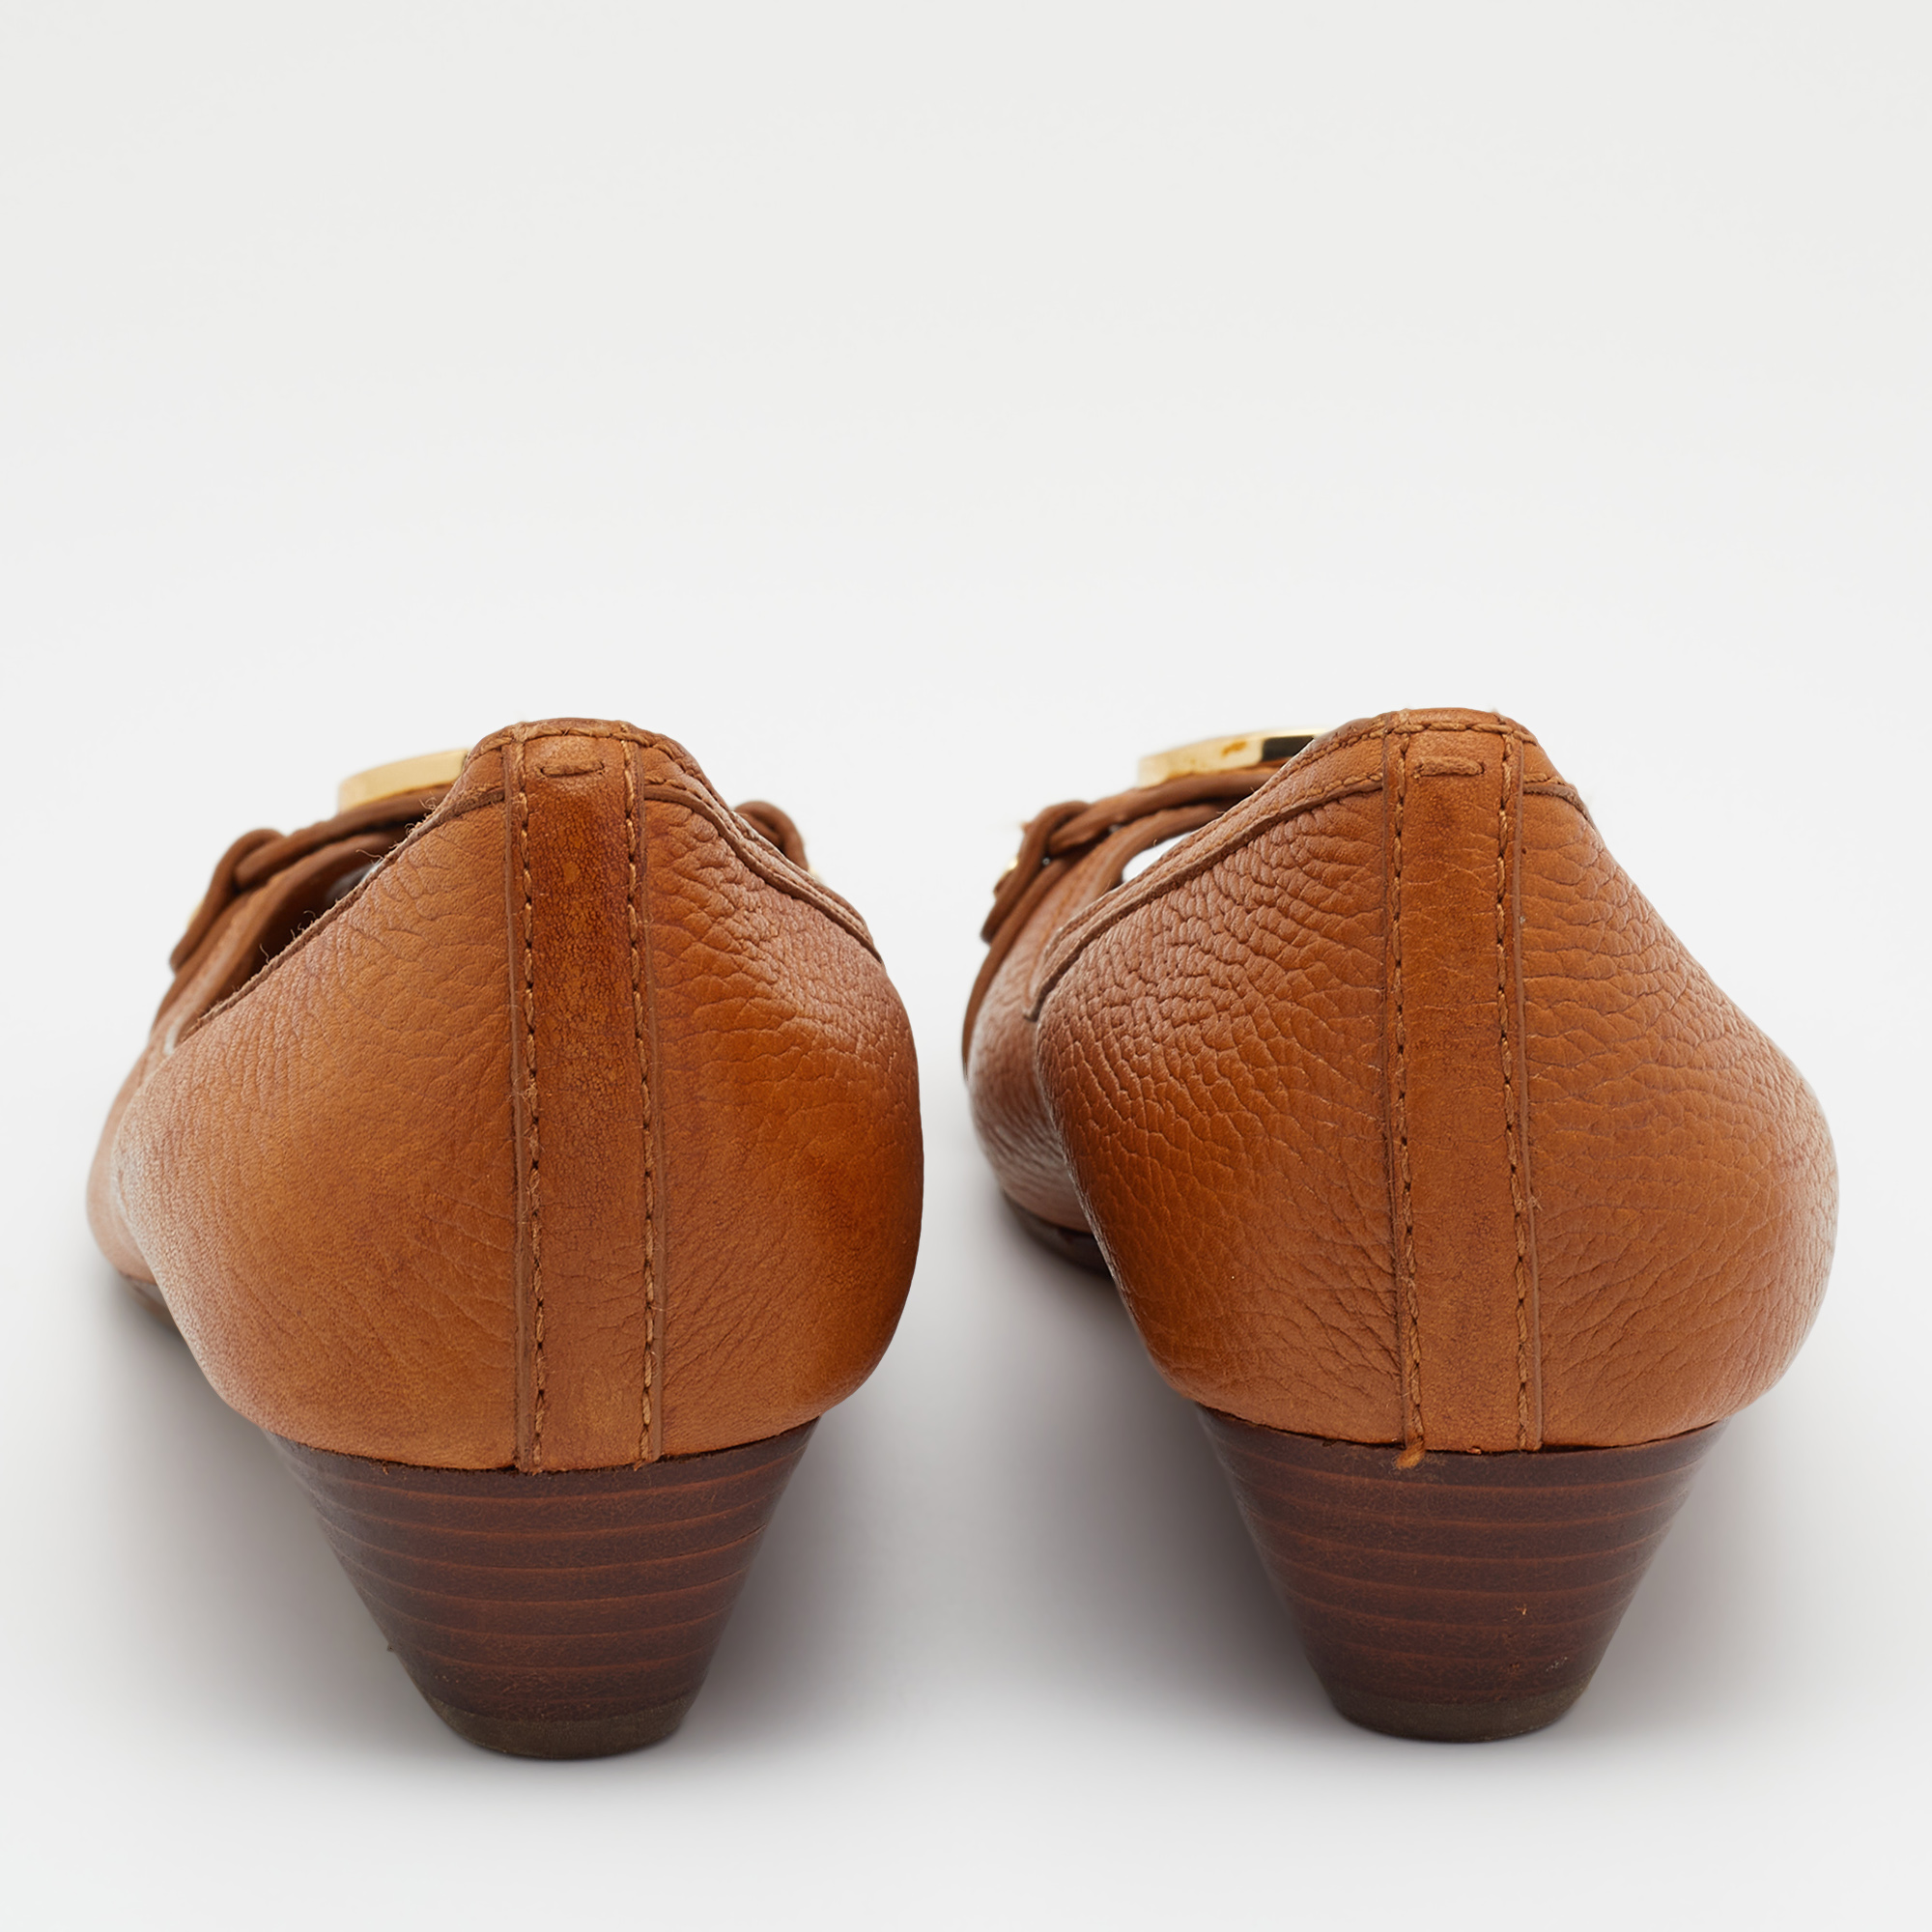 Tory Burch Tan Leather Amanda Peep Toe Wedge Pumps Size 41.5